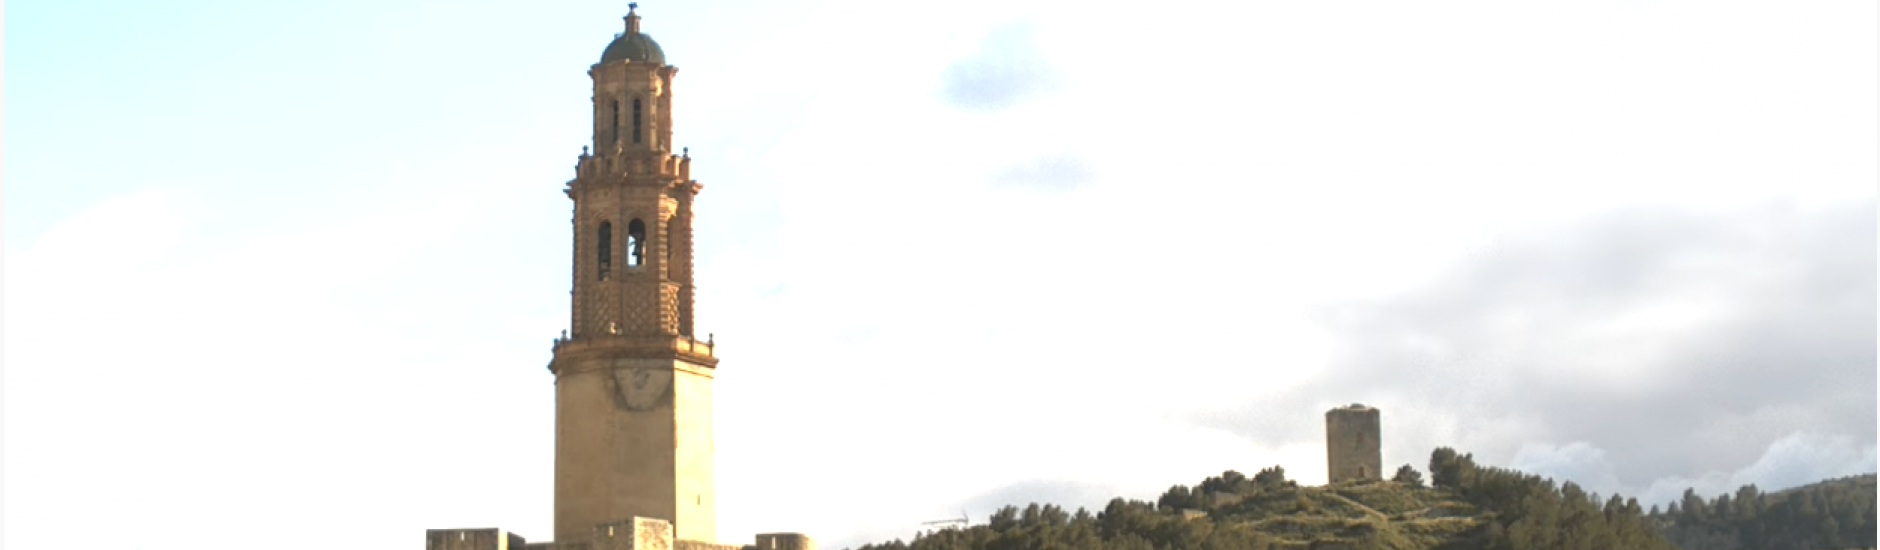 La Torre de Jérica